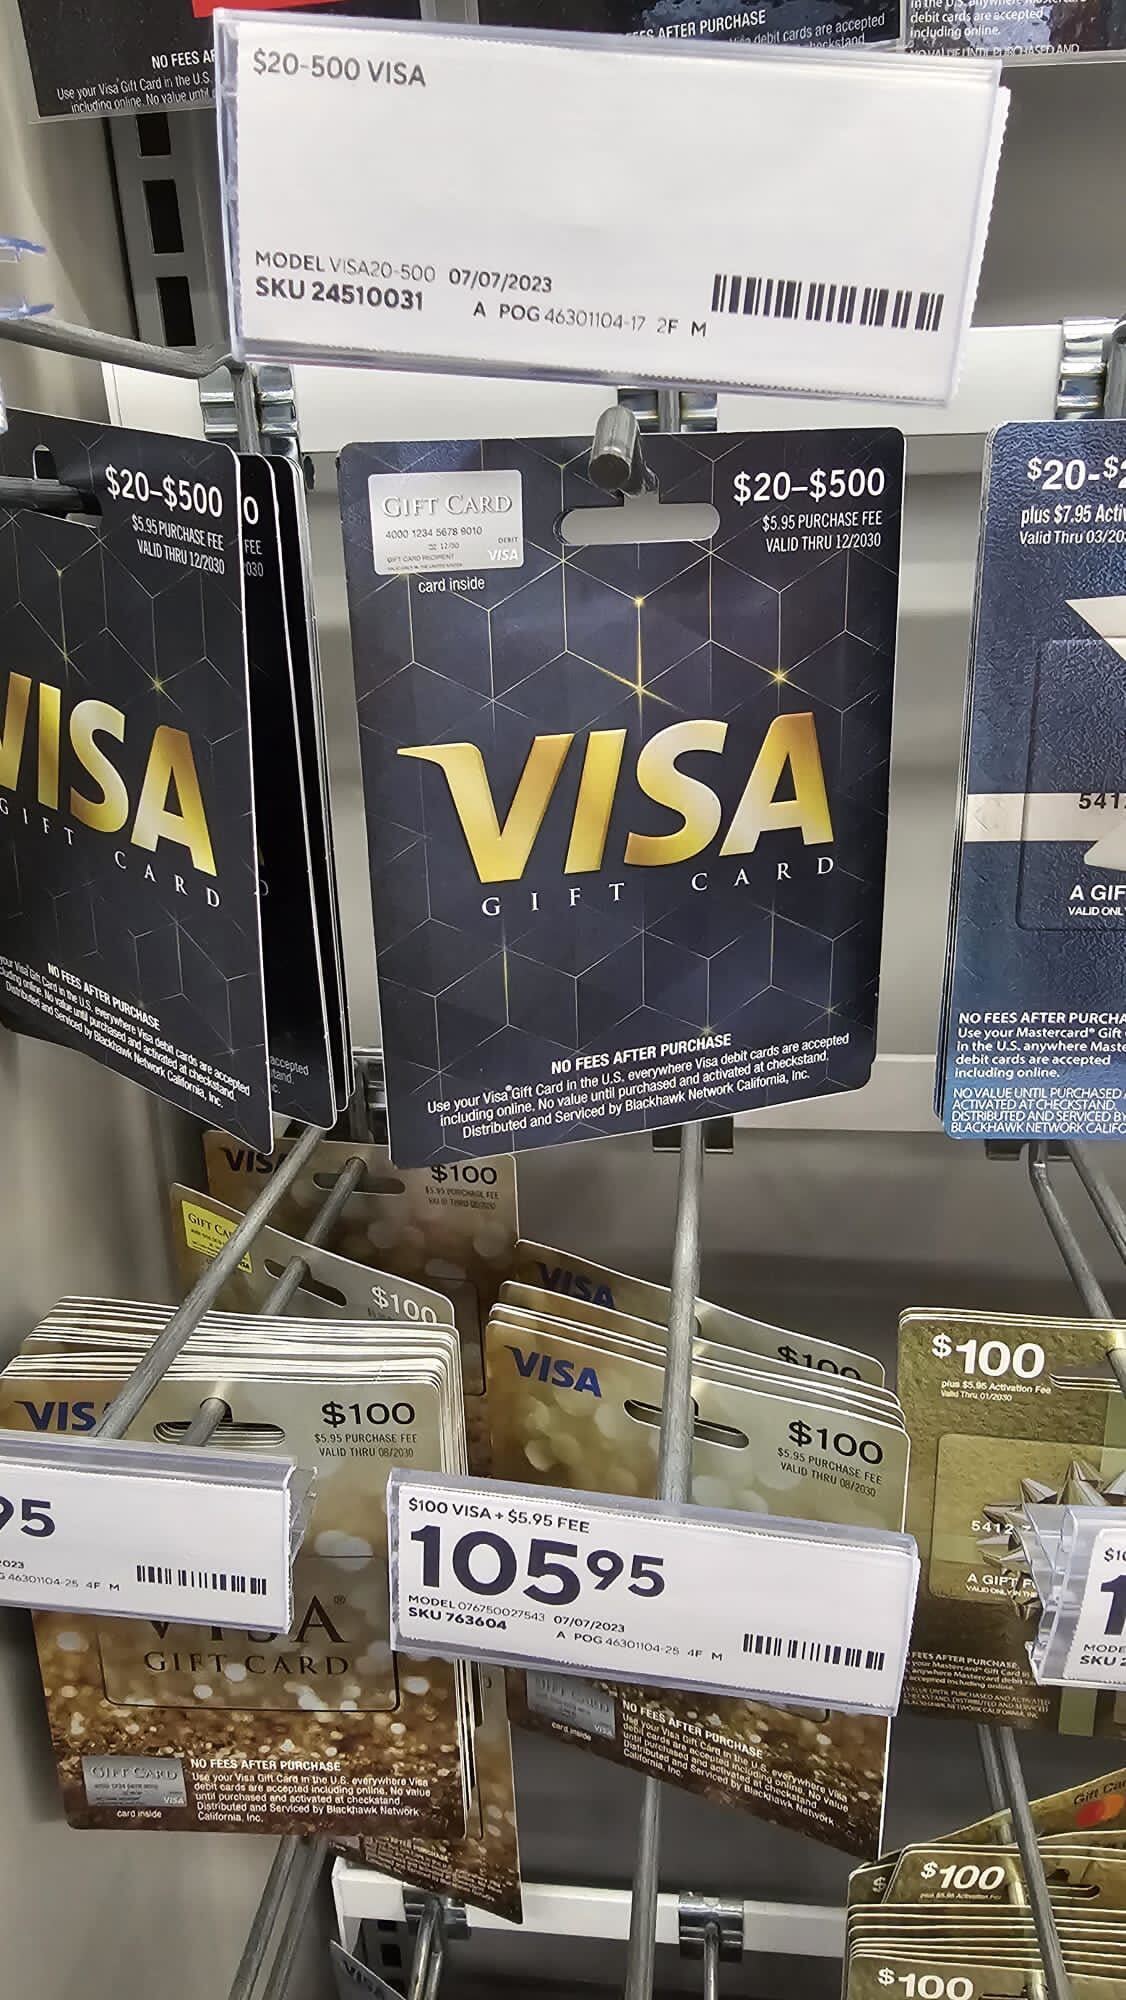 Activ Visa Cards